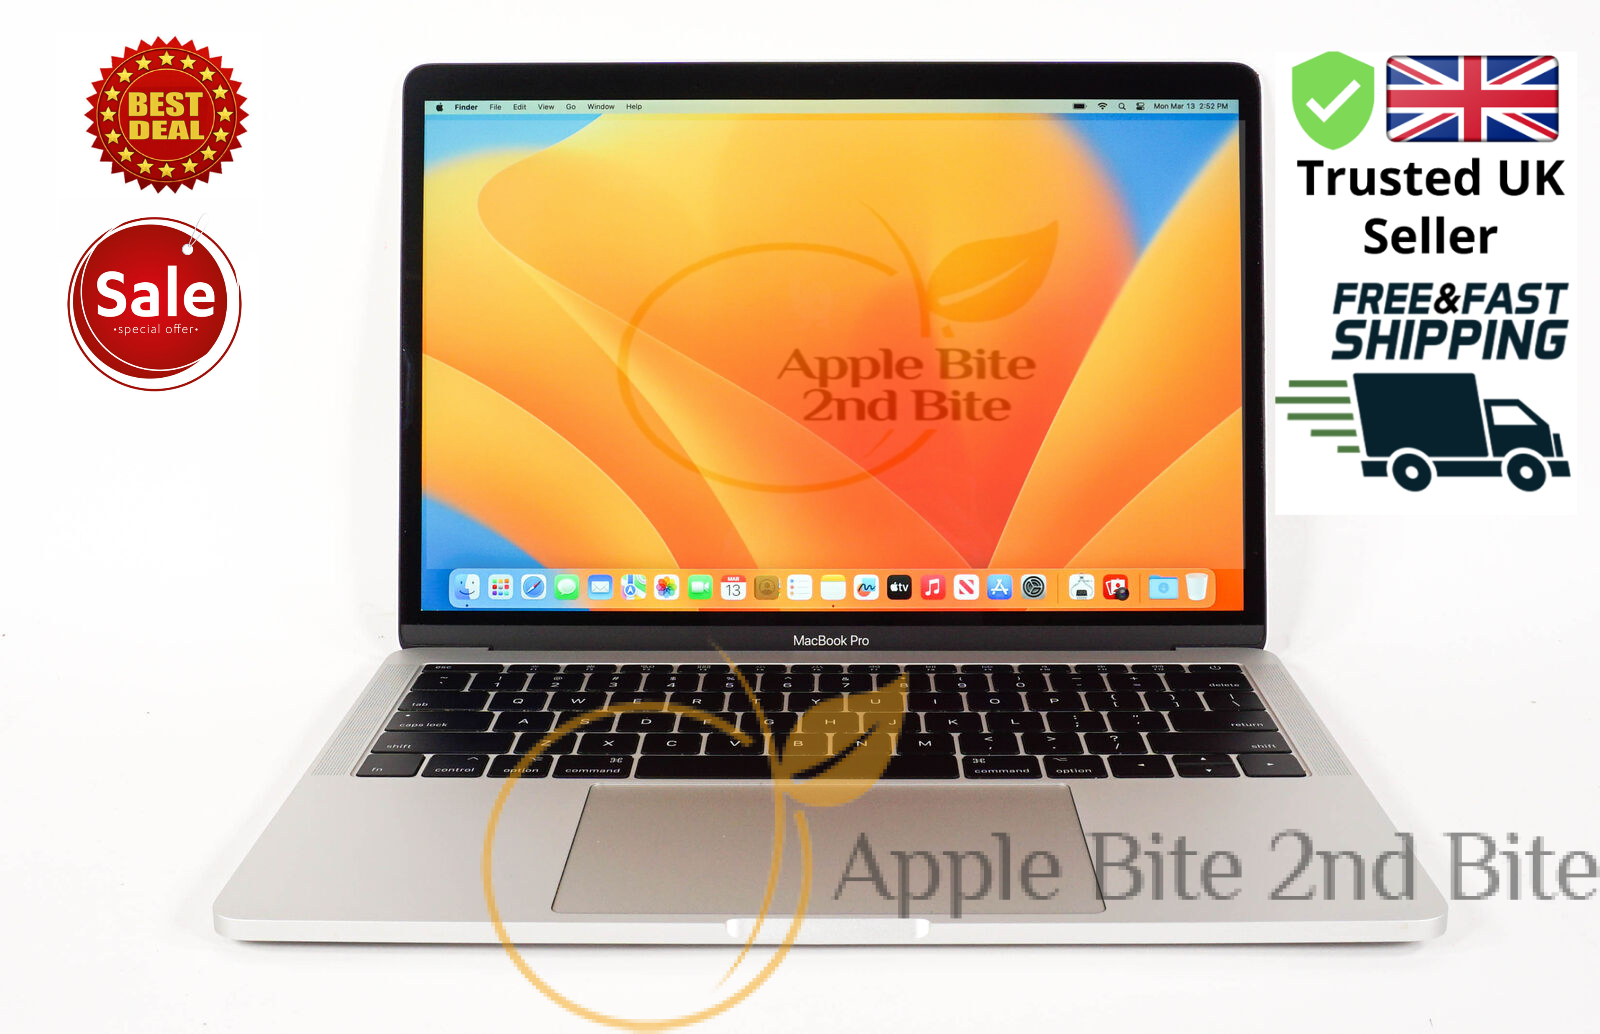 Apple MacBook Pro 13.3-inch i5 2.3Ghz 8GB 256GB MPXQ2LL/A (2017 Silver  Apple Bite 2nd Bite